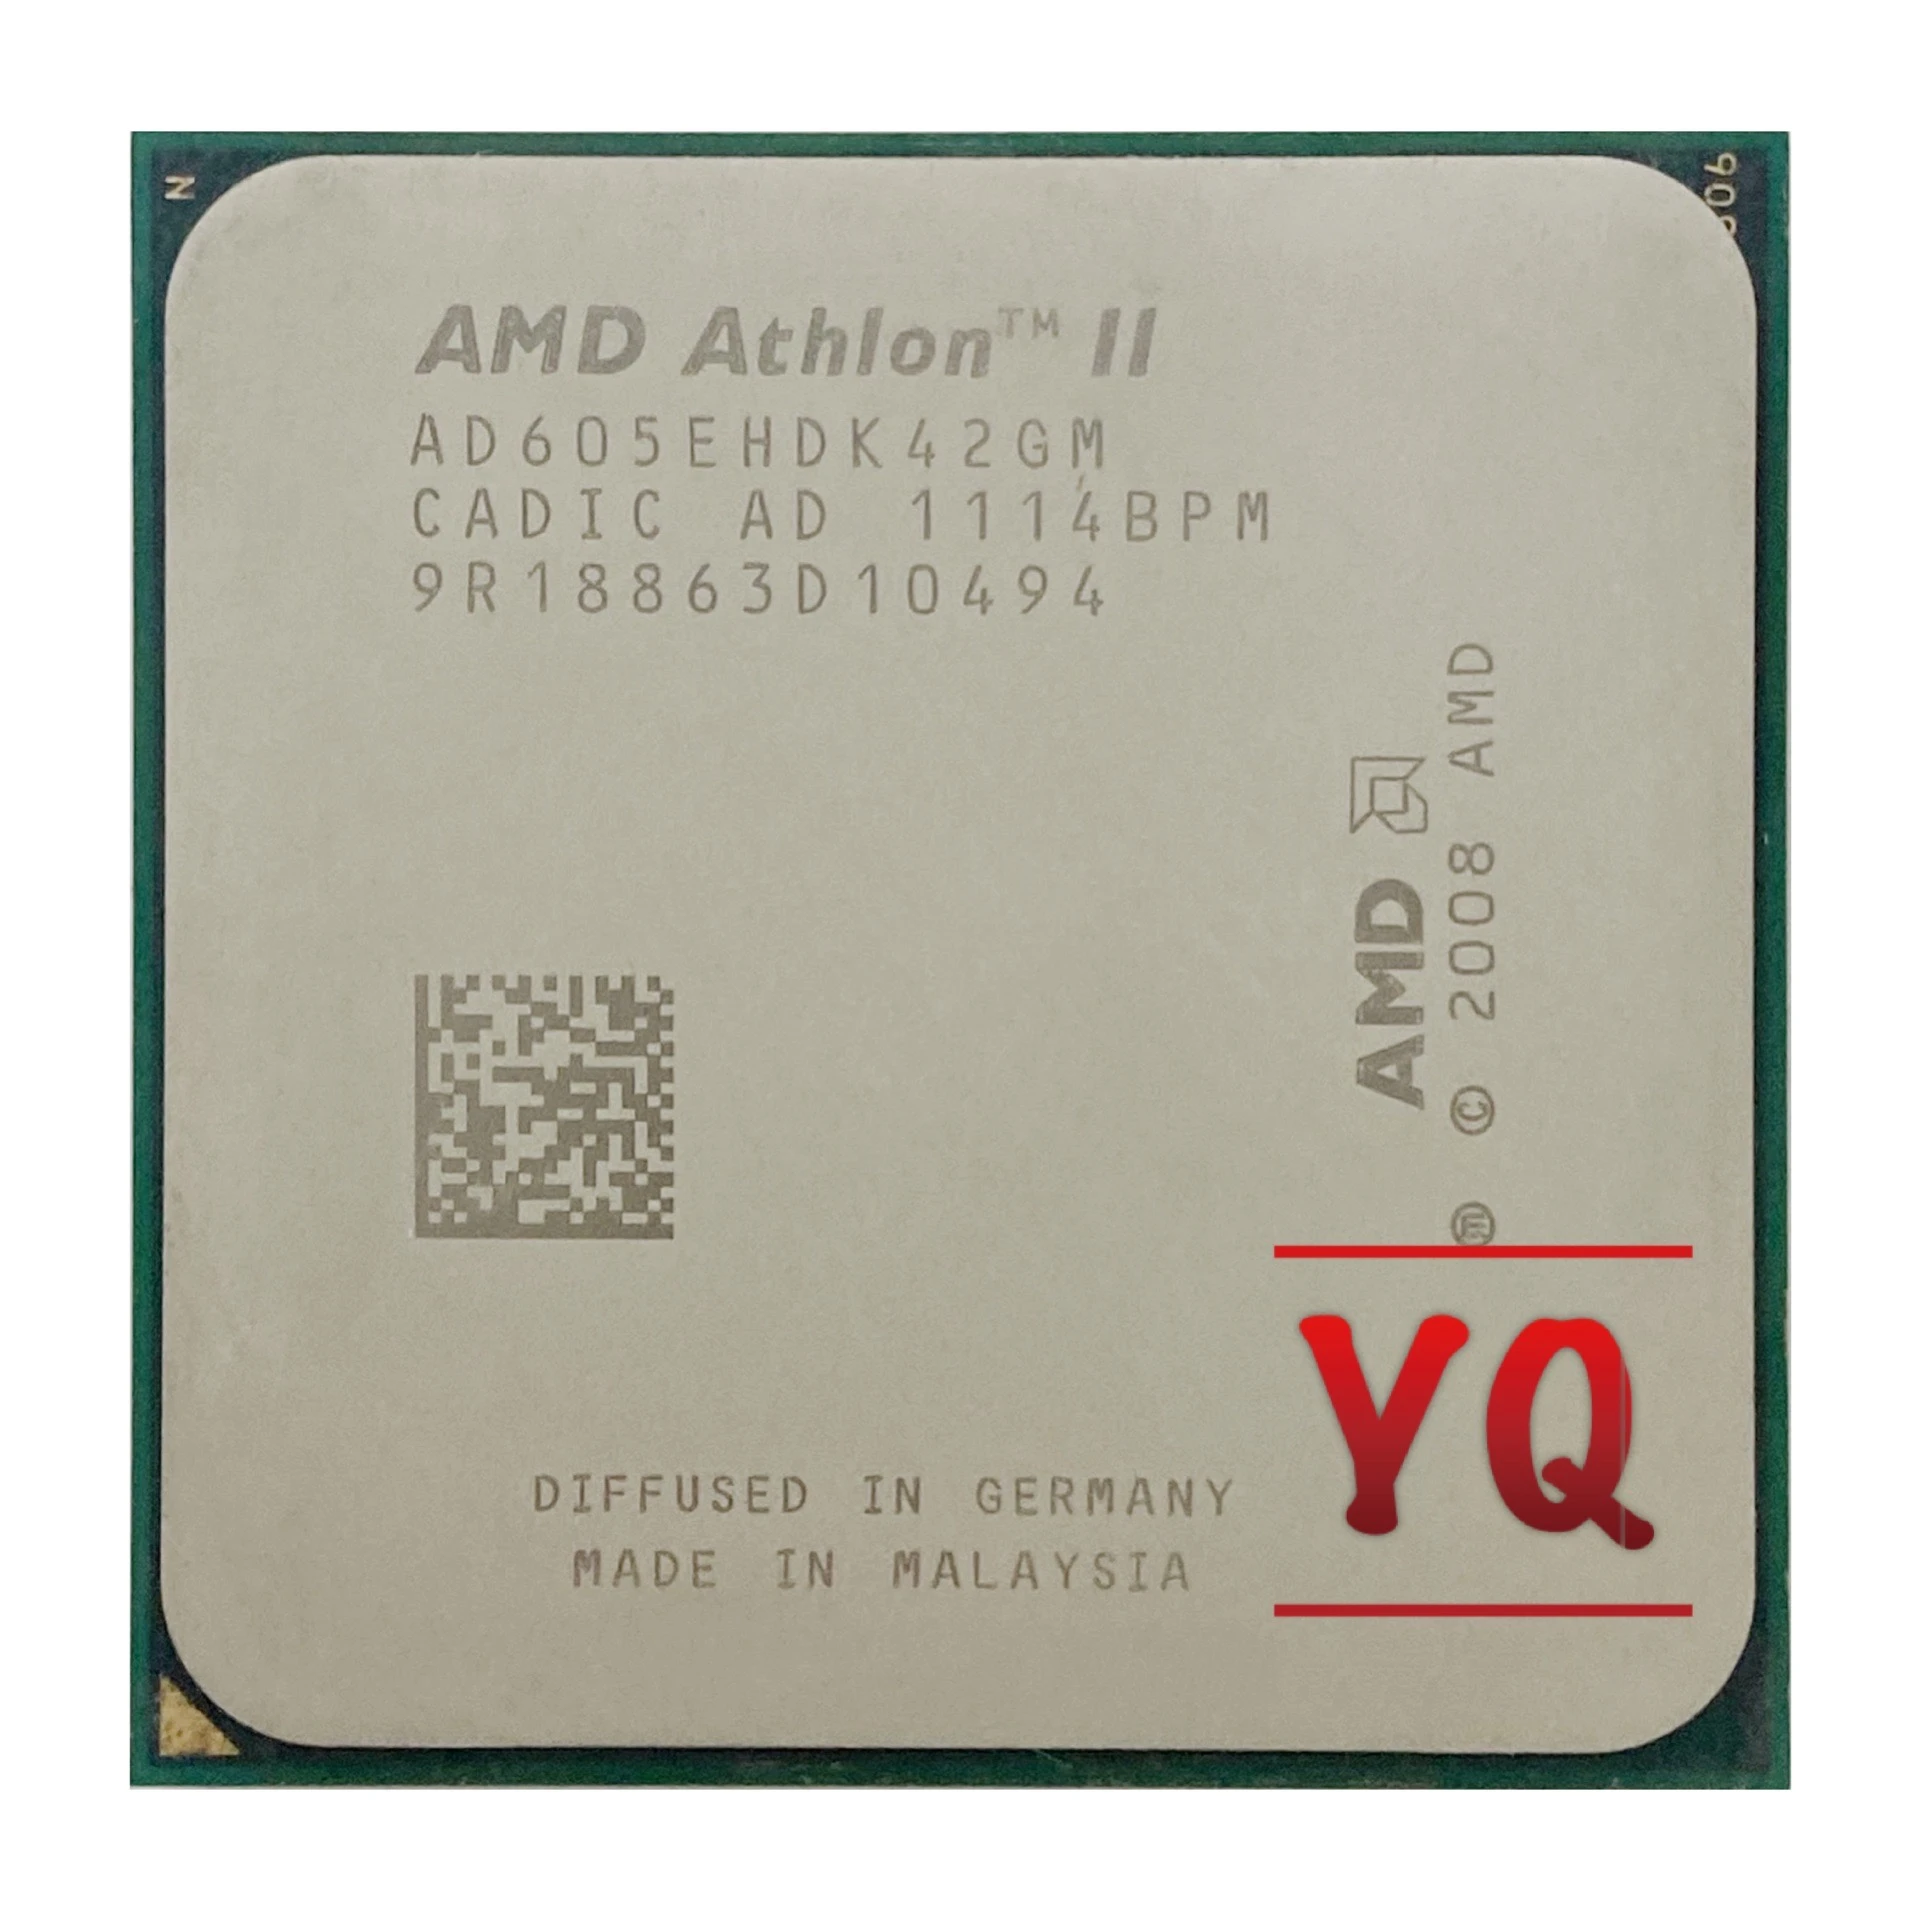 AMD Athlon II X4 605E 605 2.3 GHz quad-core CPU Processor AD605EHDK42GM/AD605EHDK42Gi Socket AM3 ryzen threadripper